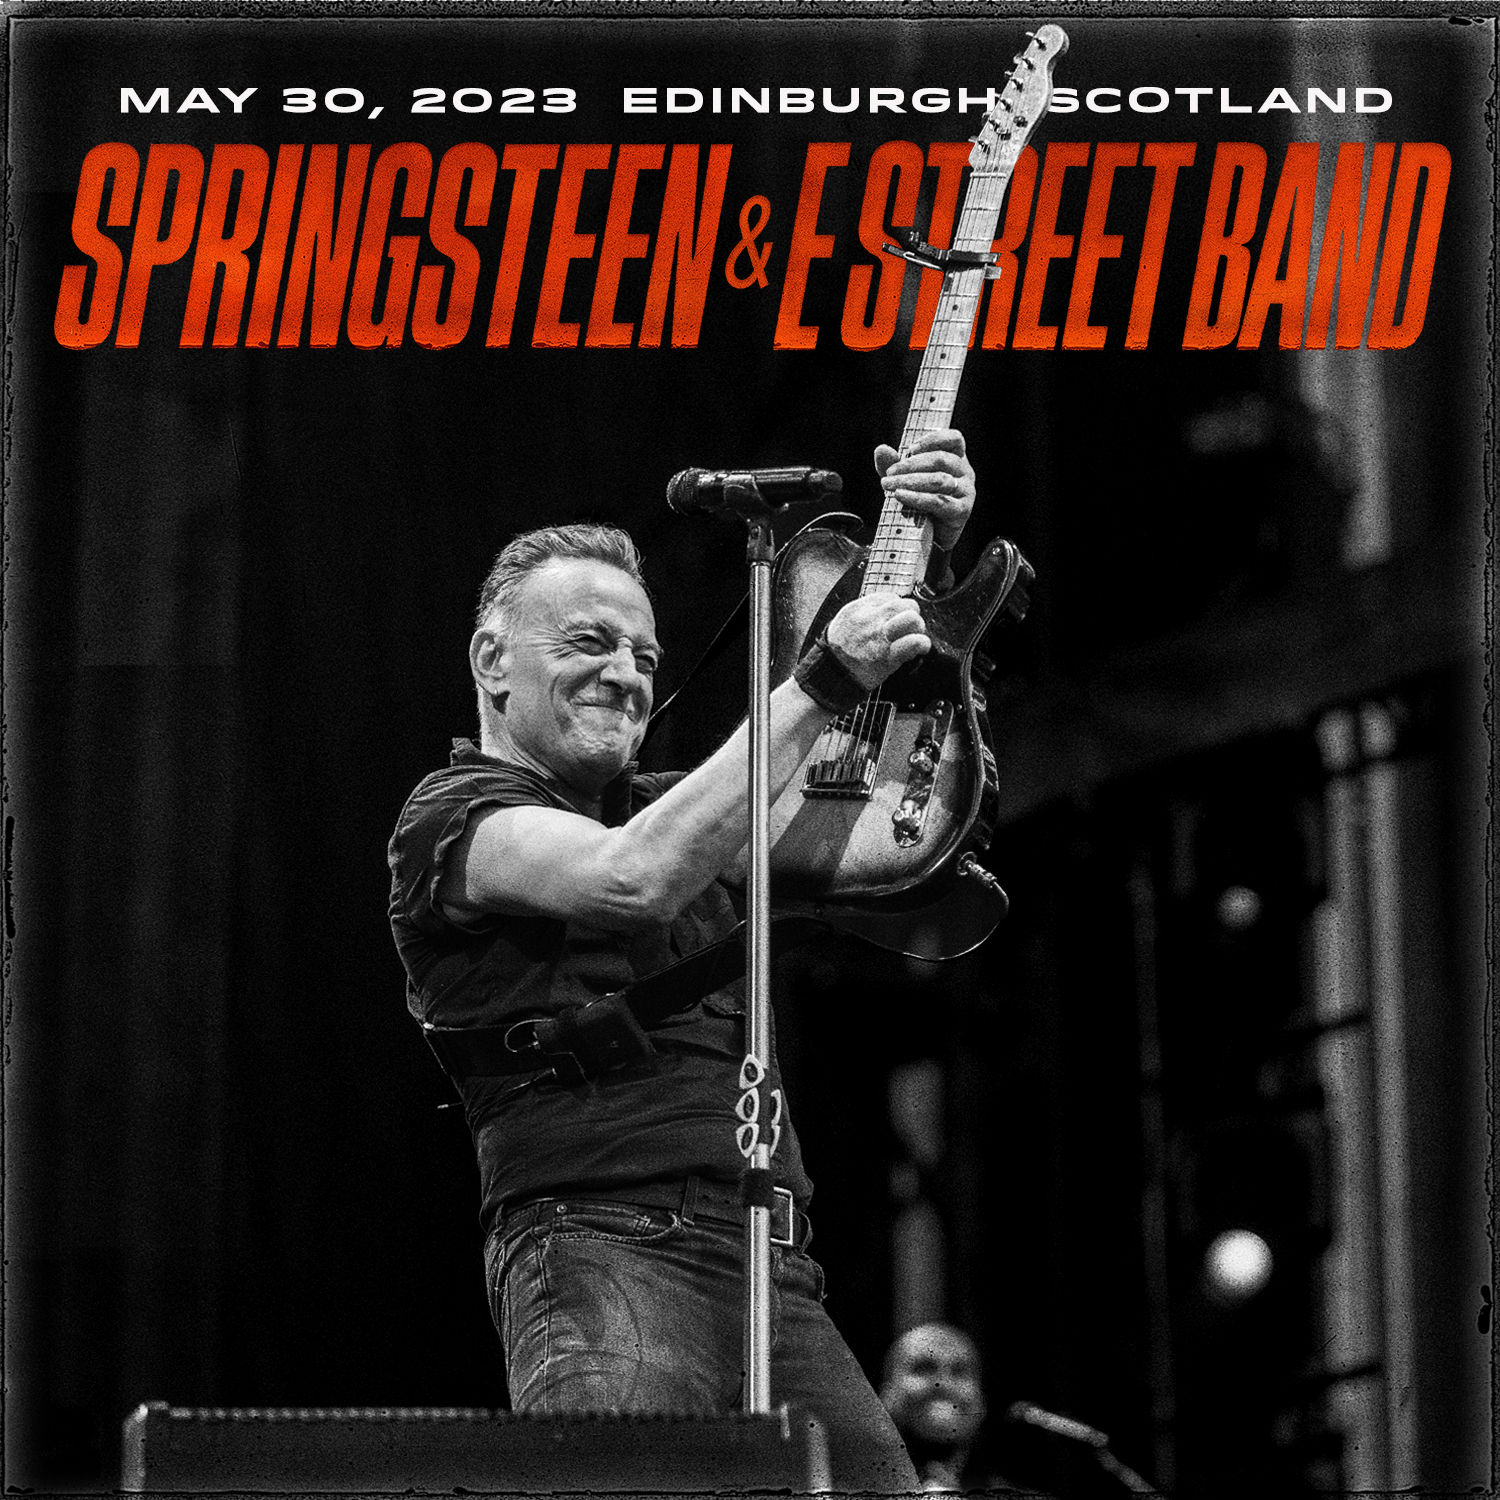 Bruce Springsteen & The E Street Band - 2023 - BT Murrayfield Stadium, Edinburgh, Scotland, May 30